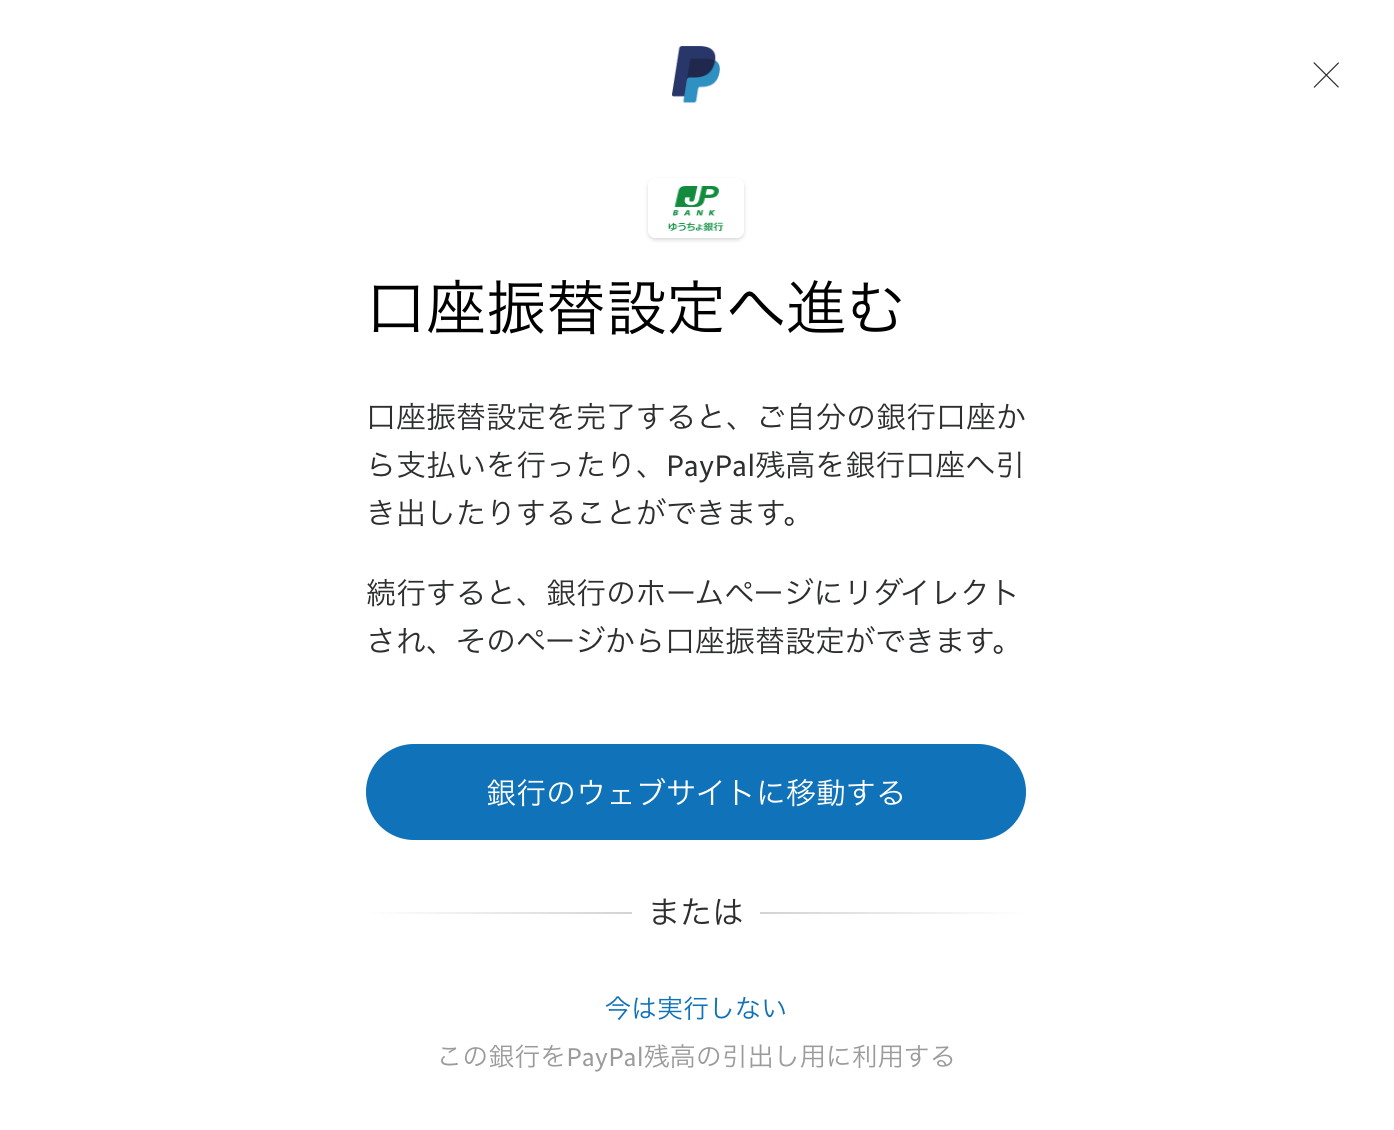 PayPal ゆうちょ銀行 銀行のウェブサイトに移動